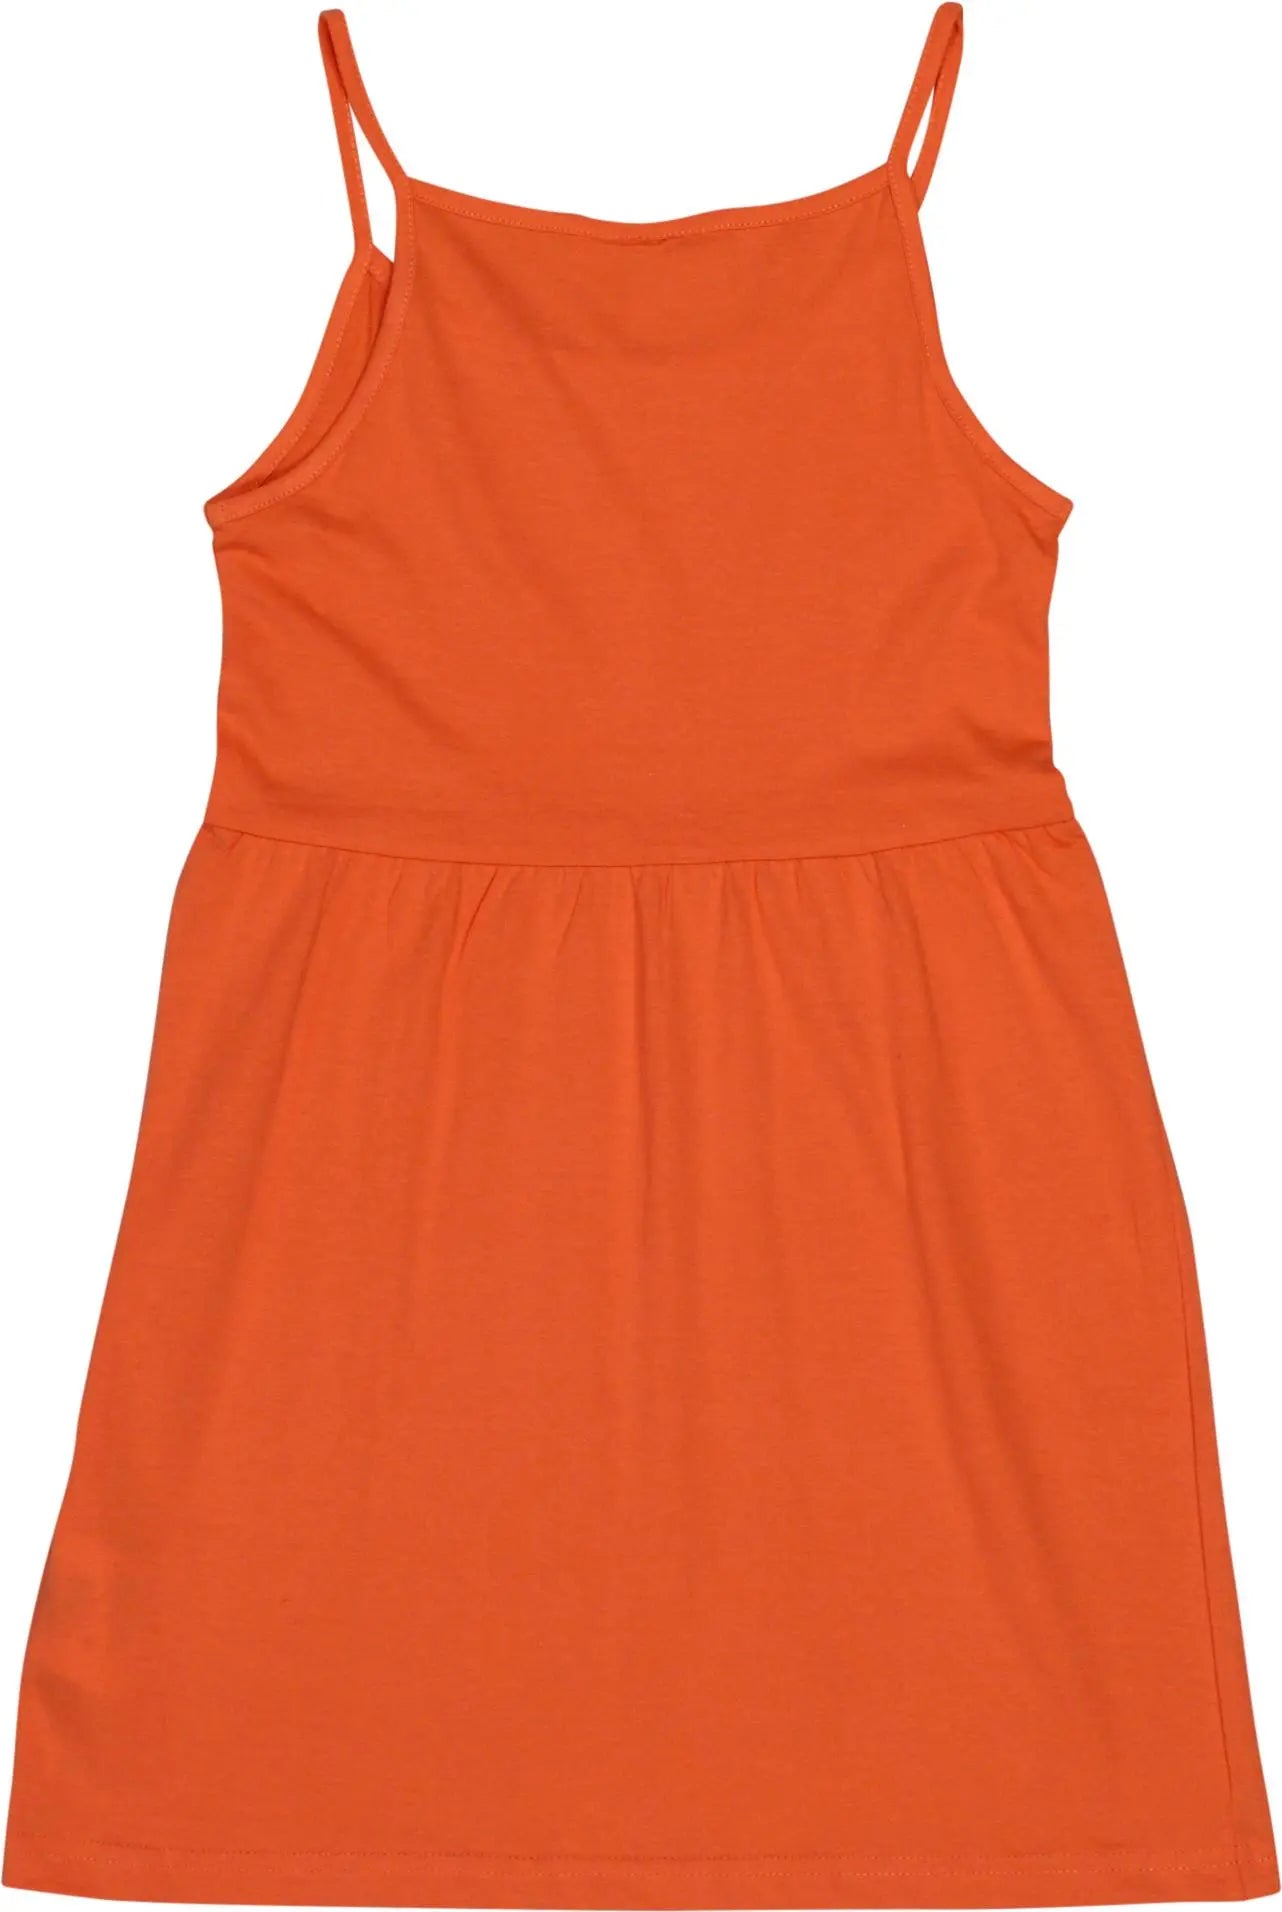 Fashion Girl - Orange Dress- ThriftTale.com - Vintage and second handclothing